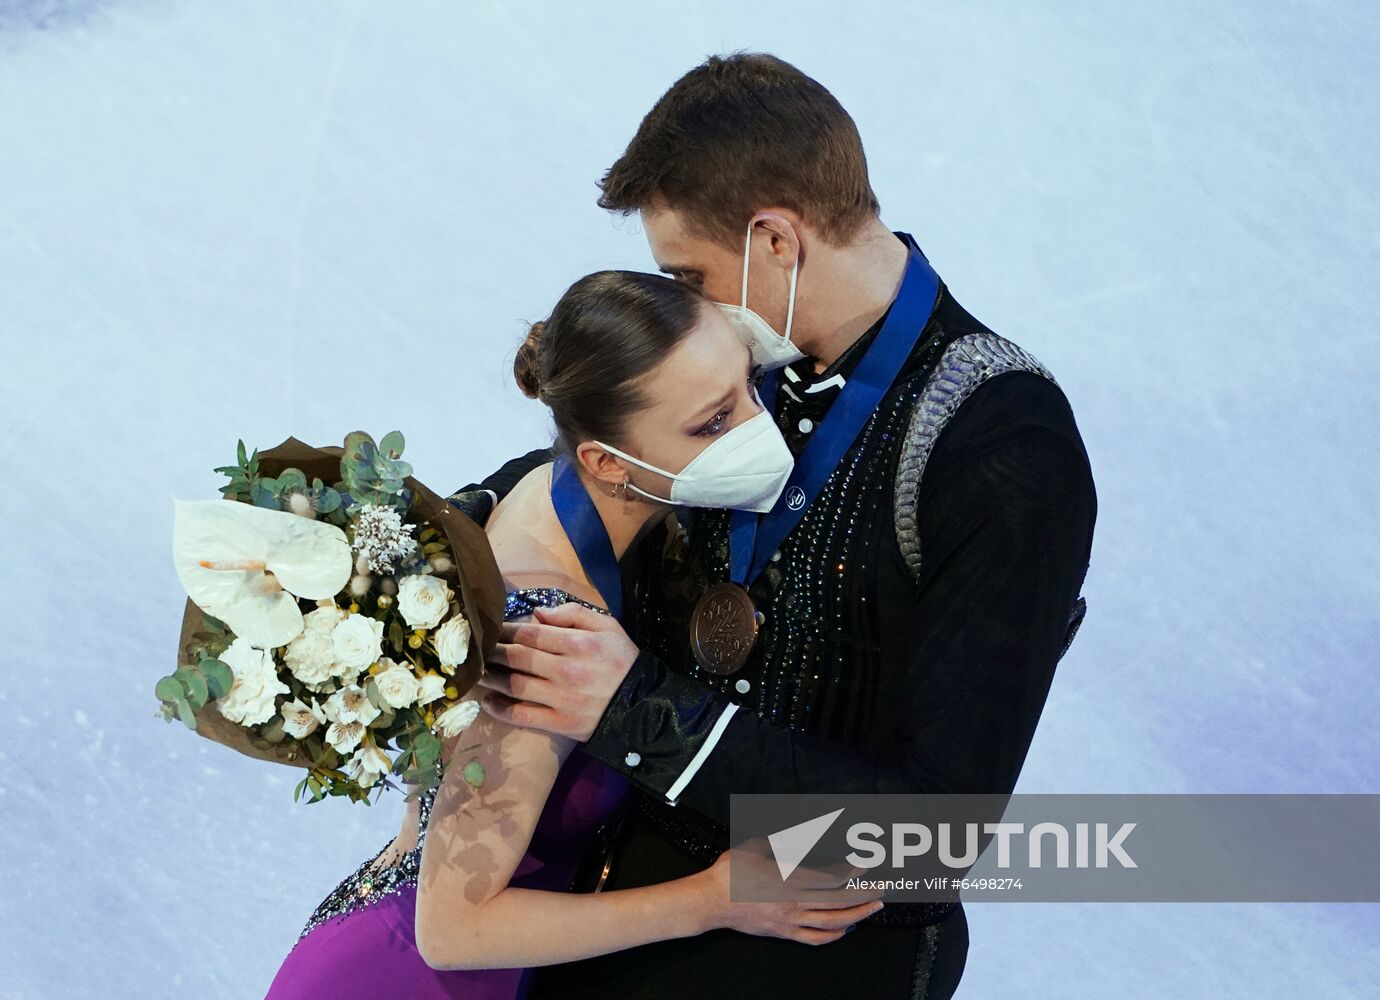 Sweden Figure Skating Worlds Pairs Awarding Ceremony